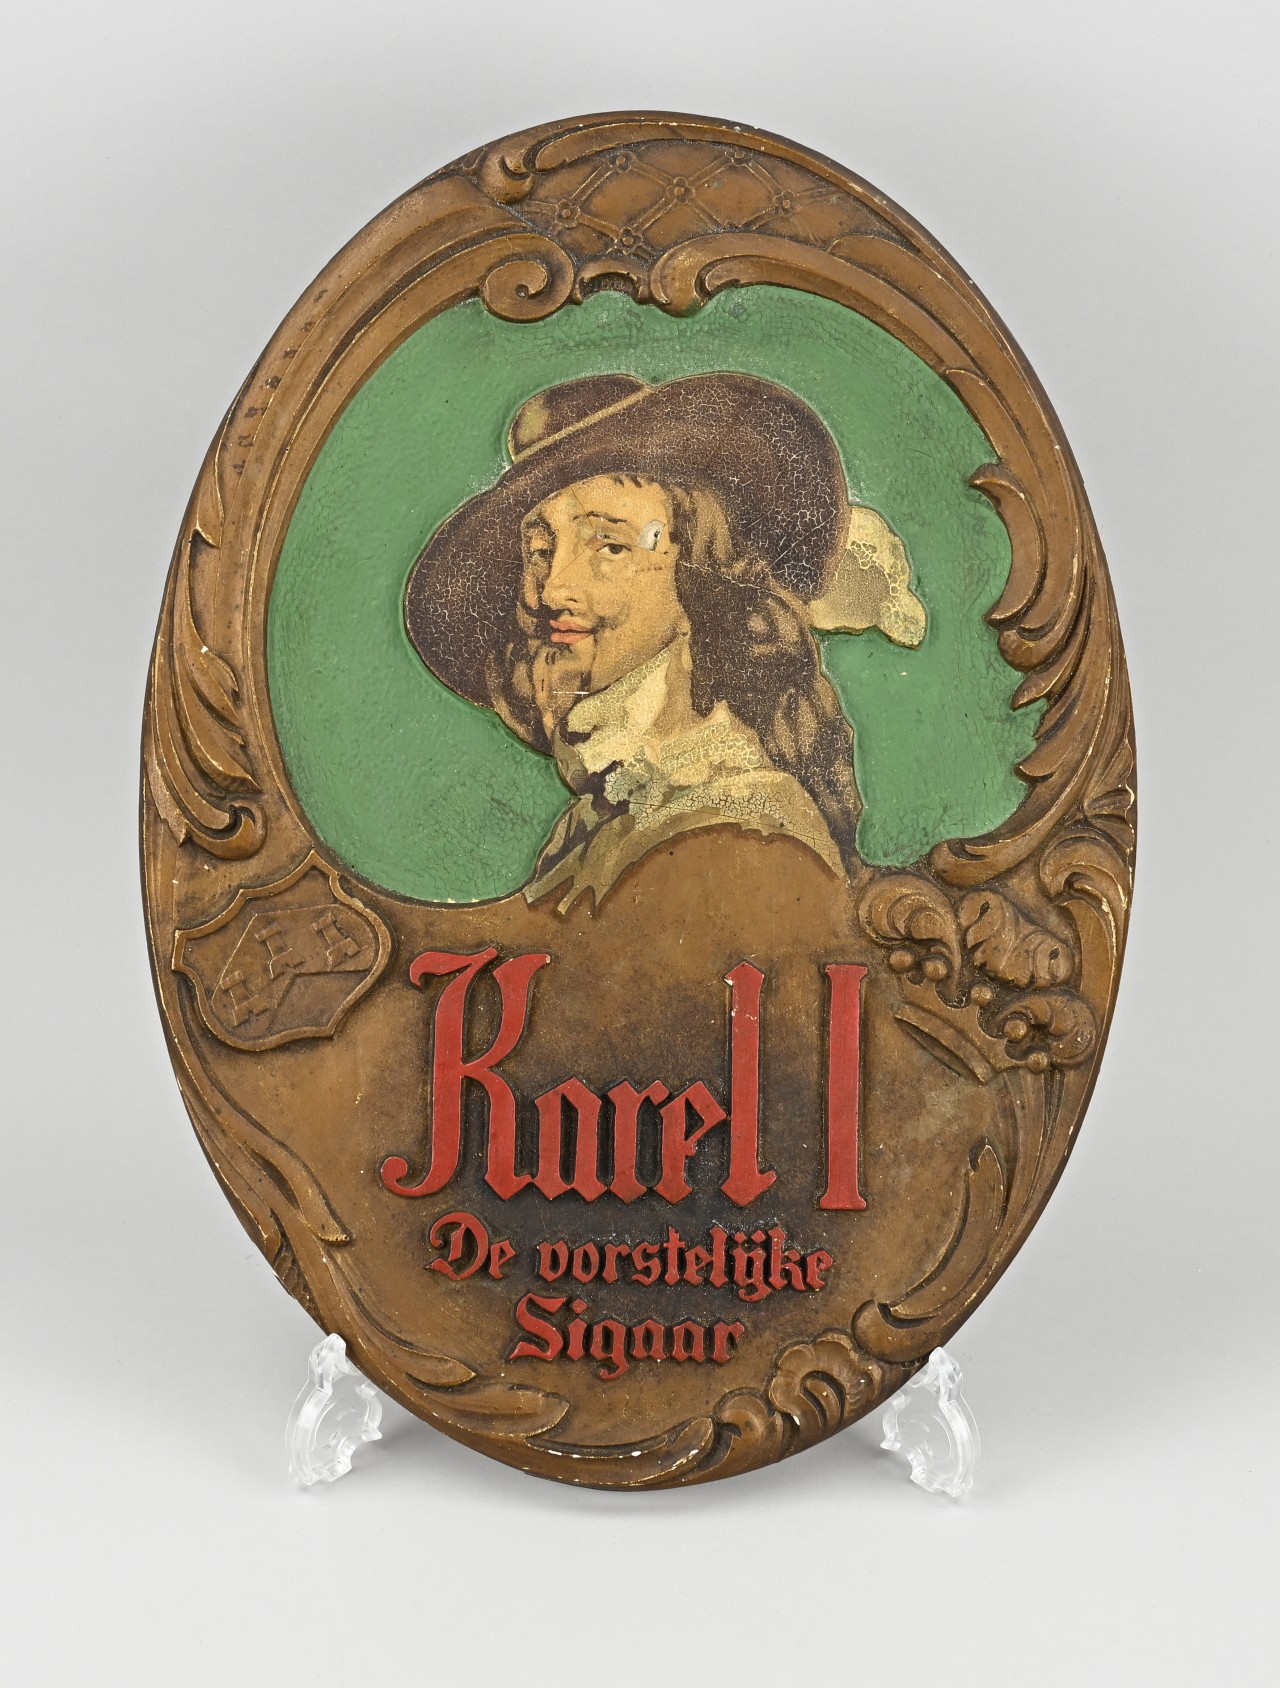 Cigar advertising Charles I